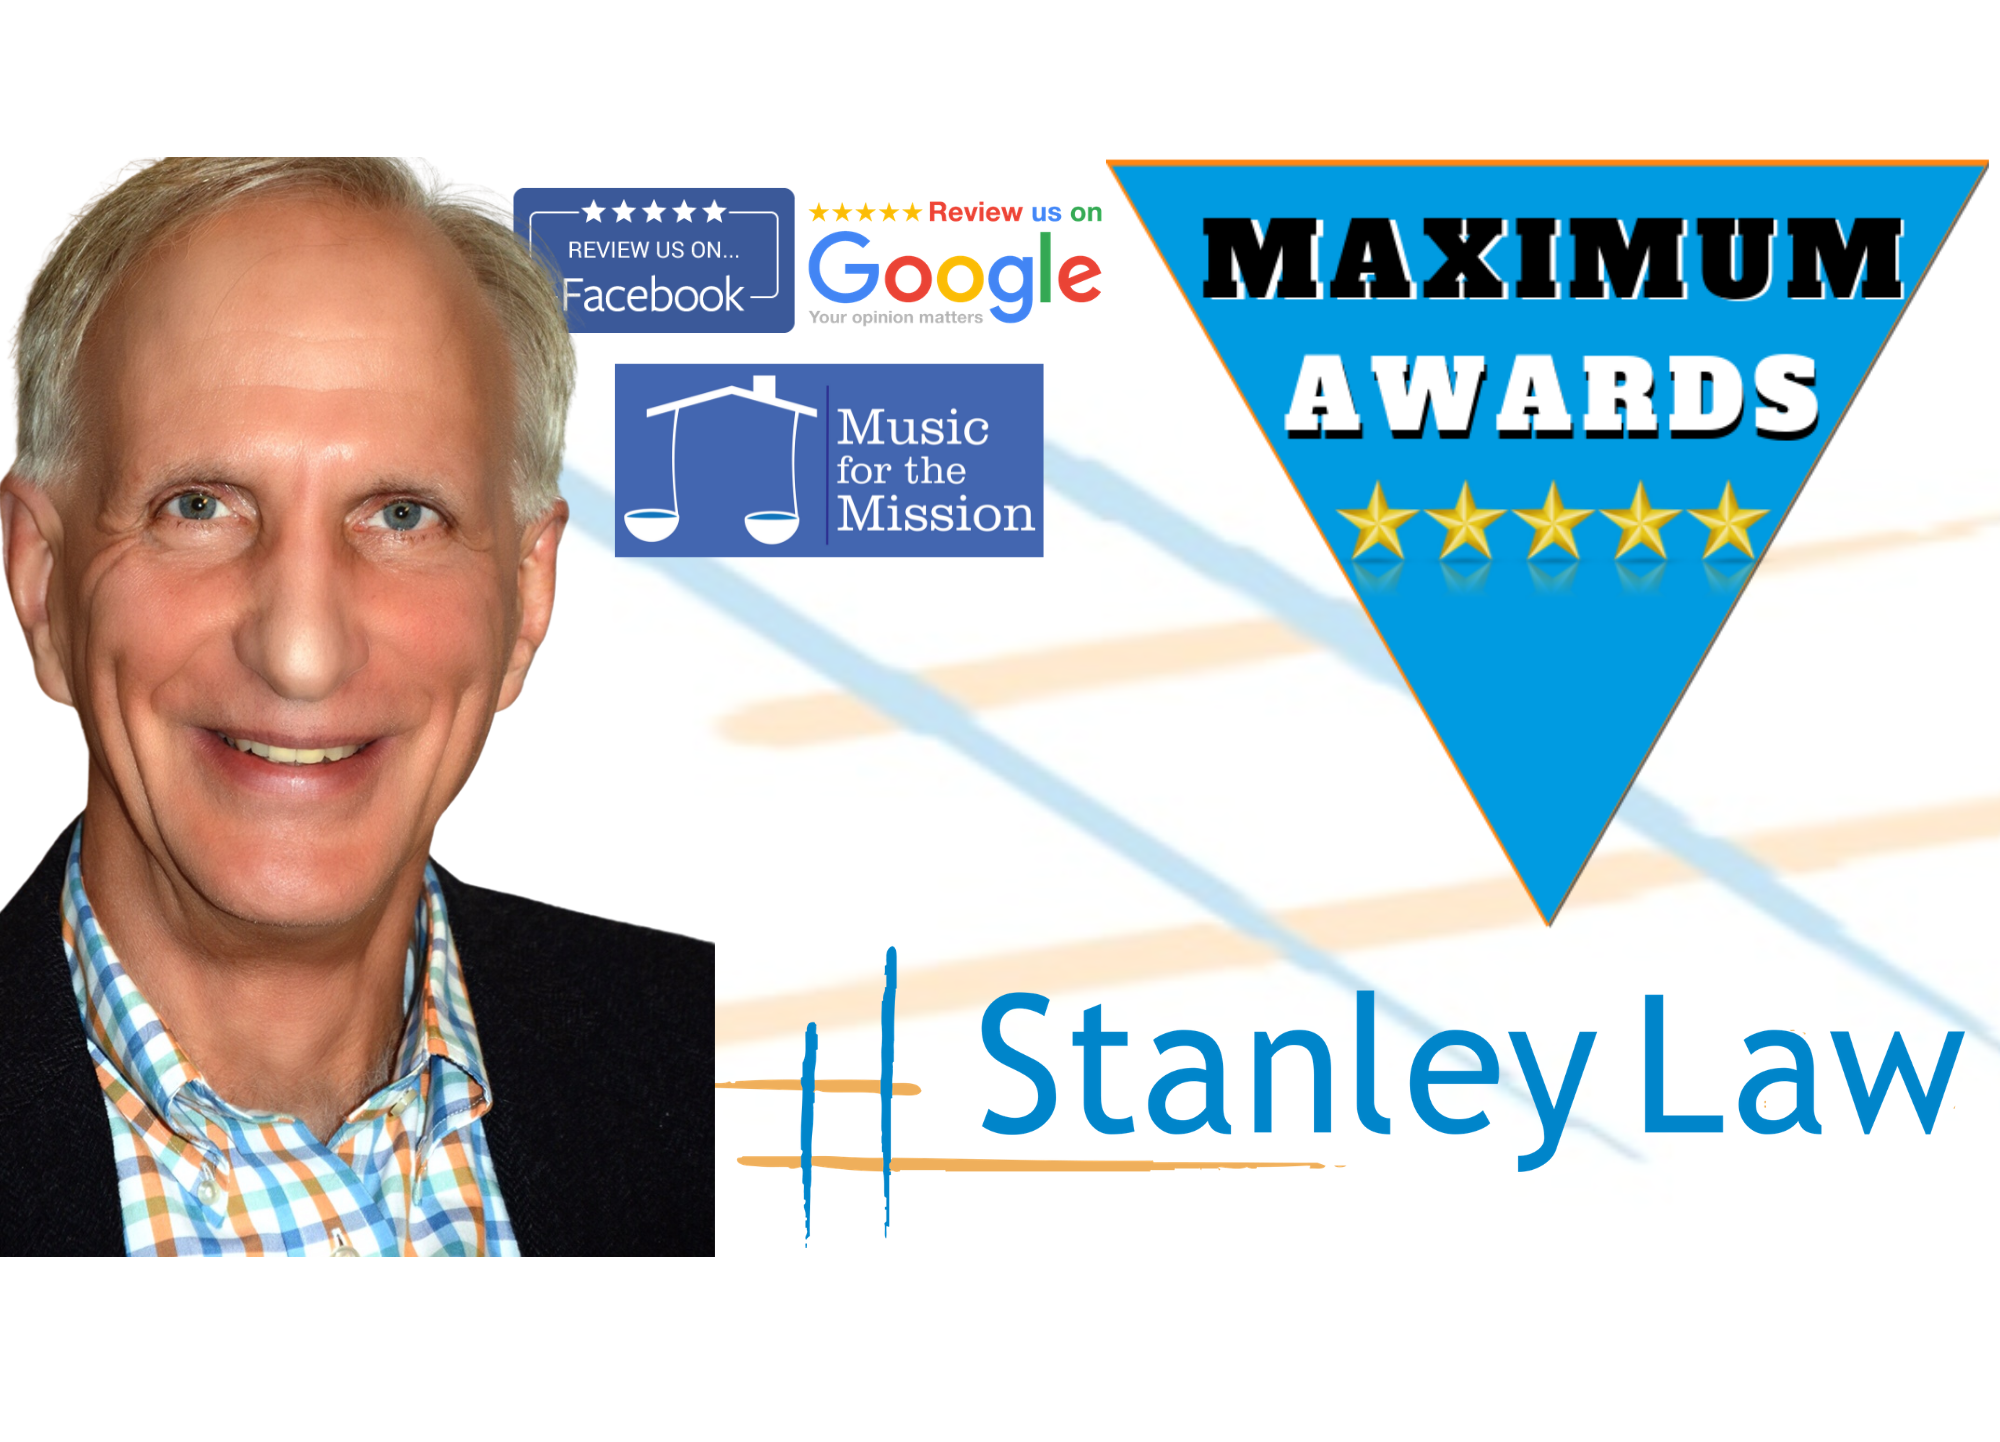 Joe stanley, maximum awards with 5 stars, google, stanley law